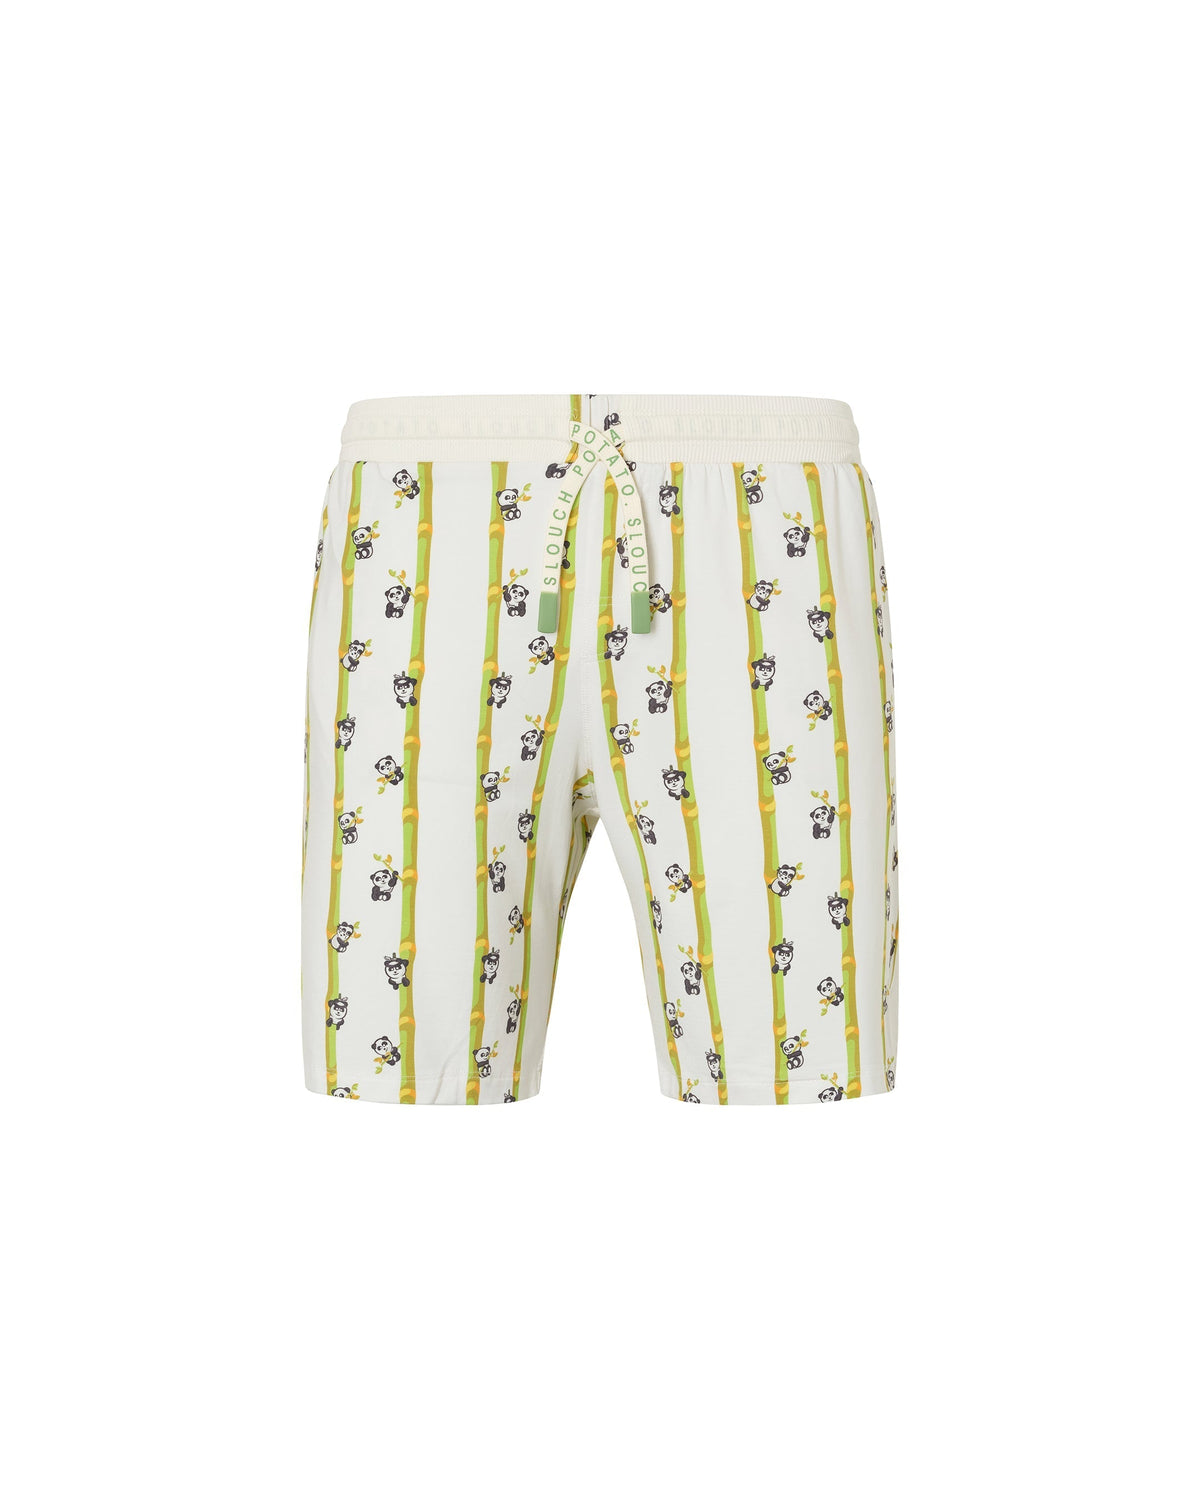 Slouch Shorts- Panda (50% off)